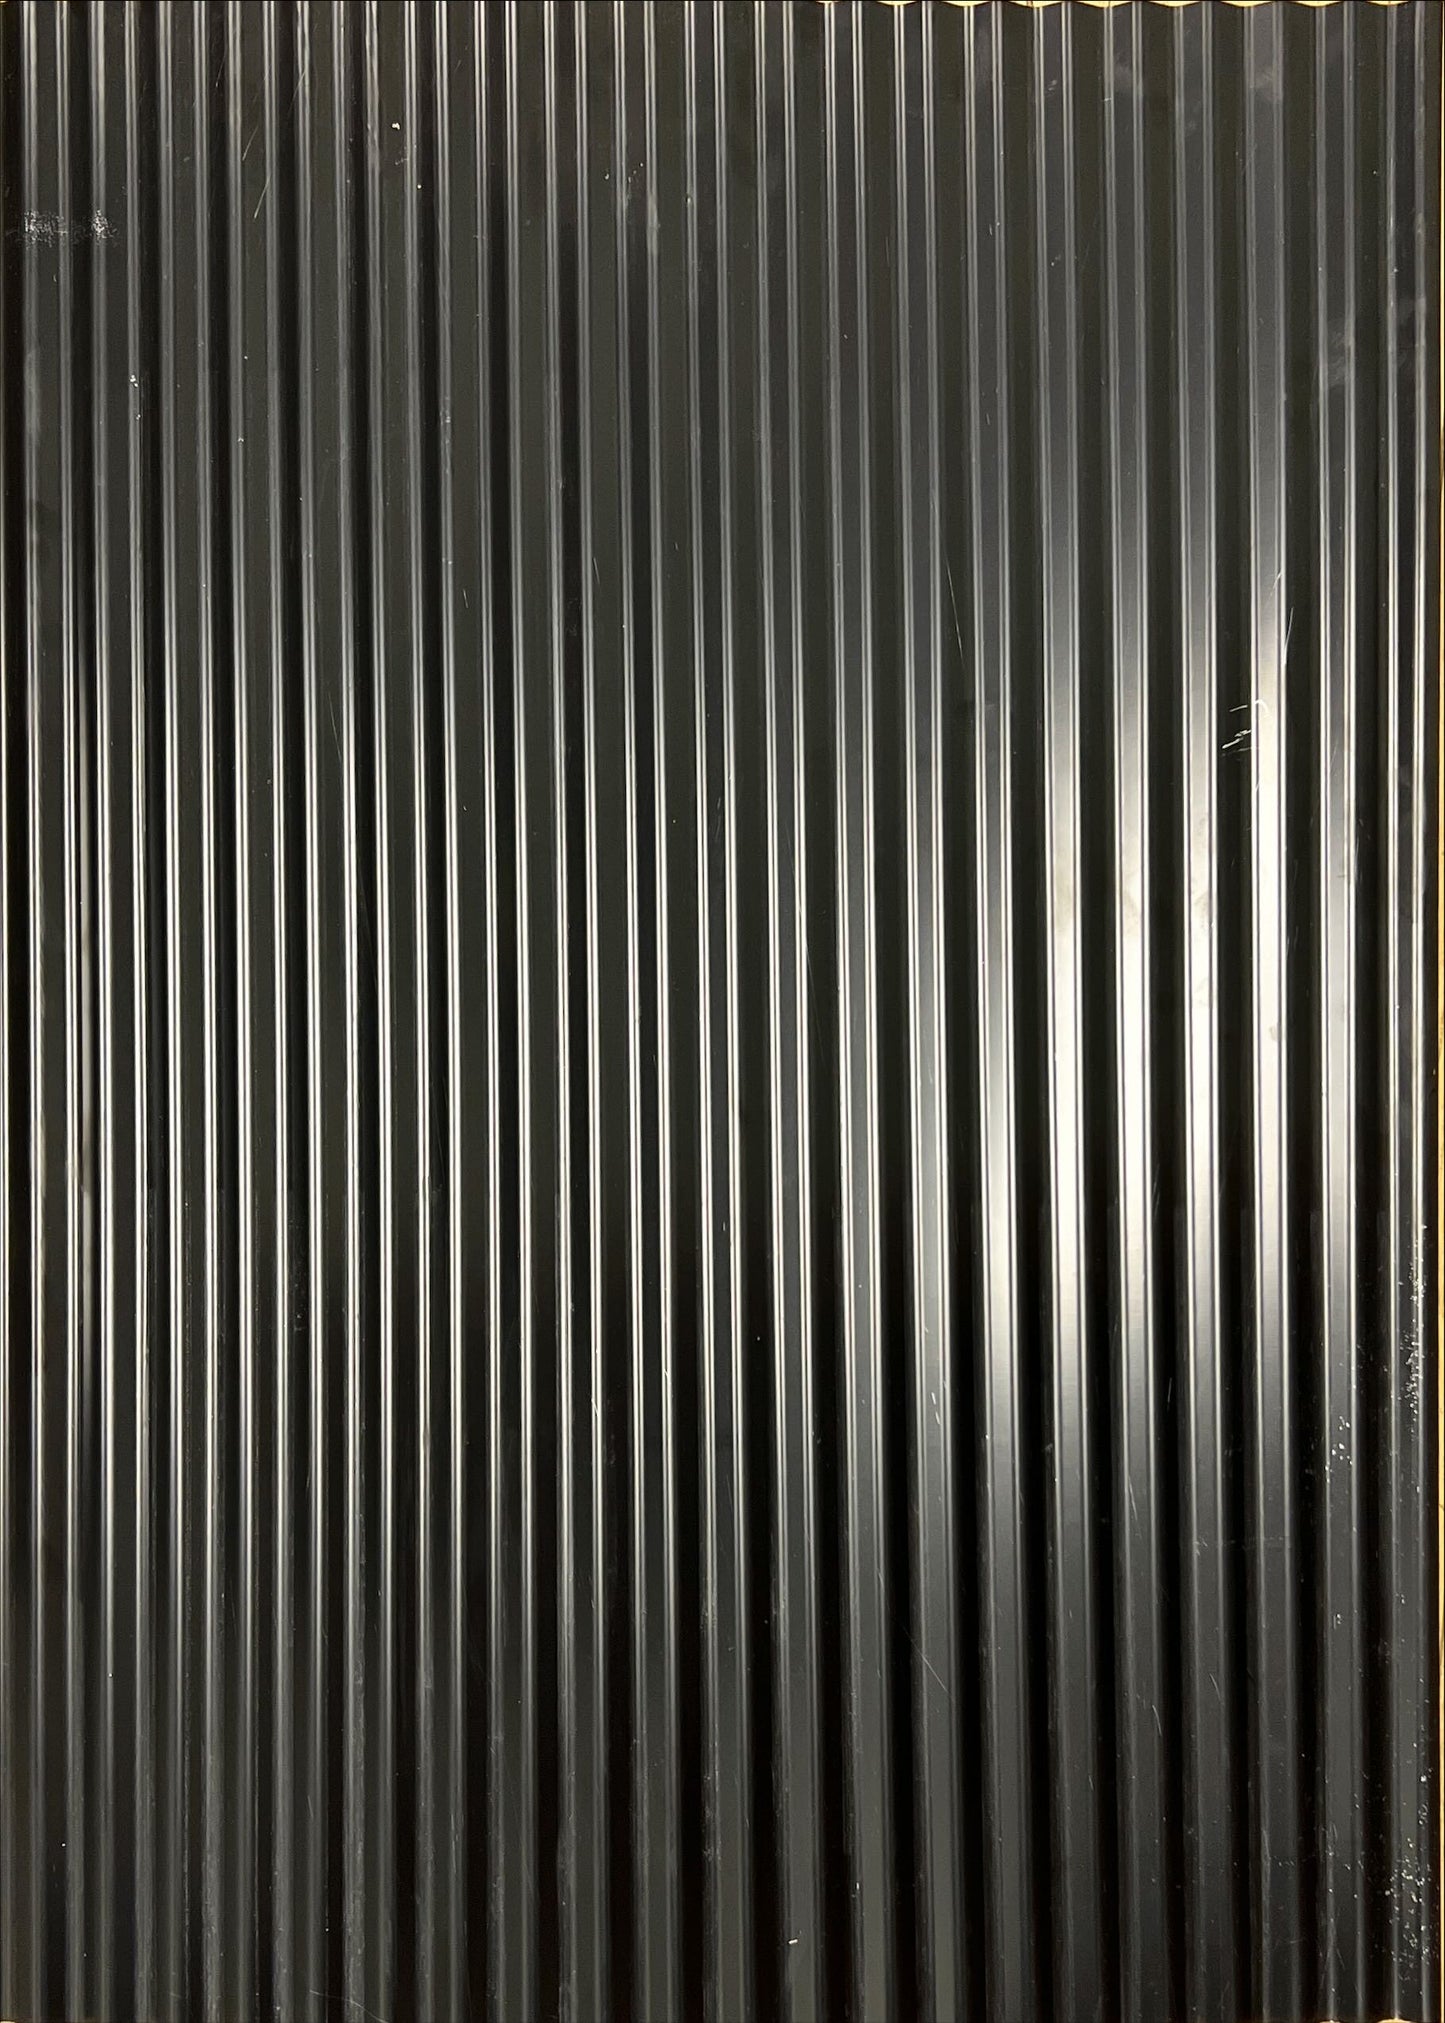 Colorado Corrugated Metal Wainscoting